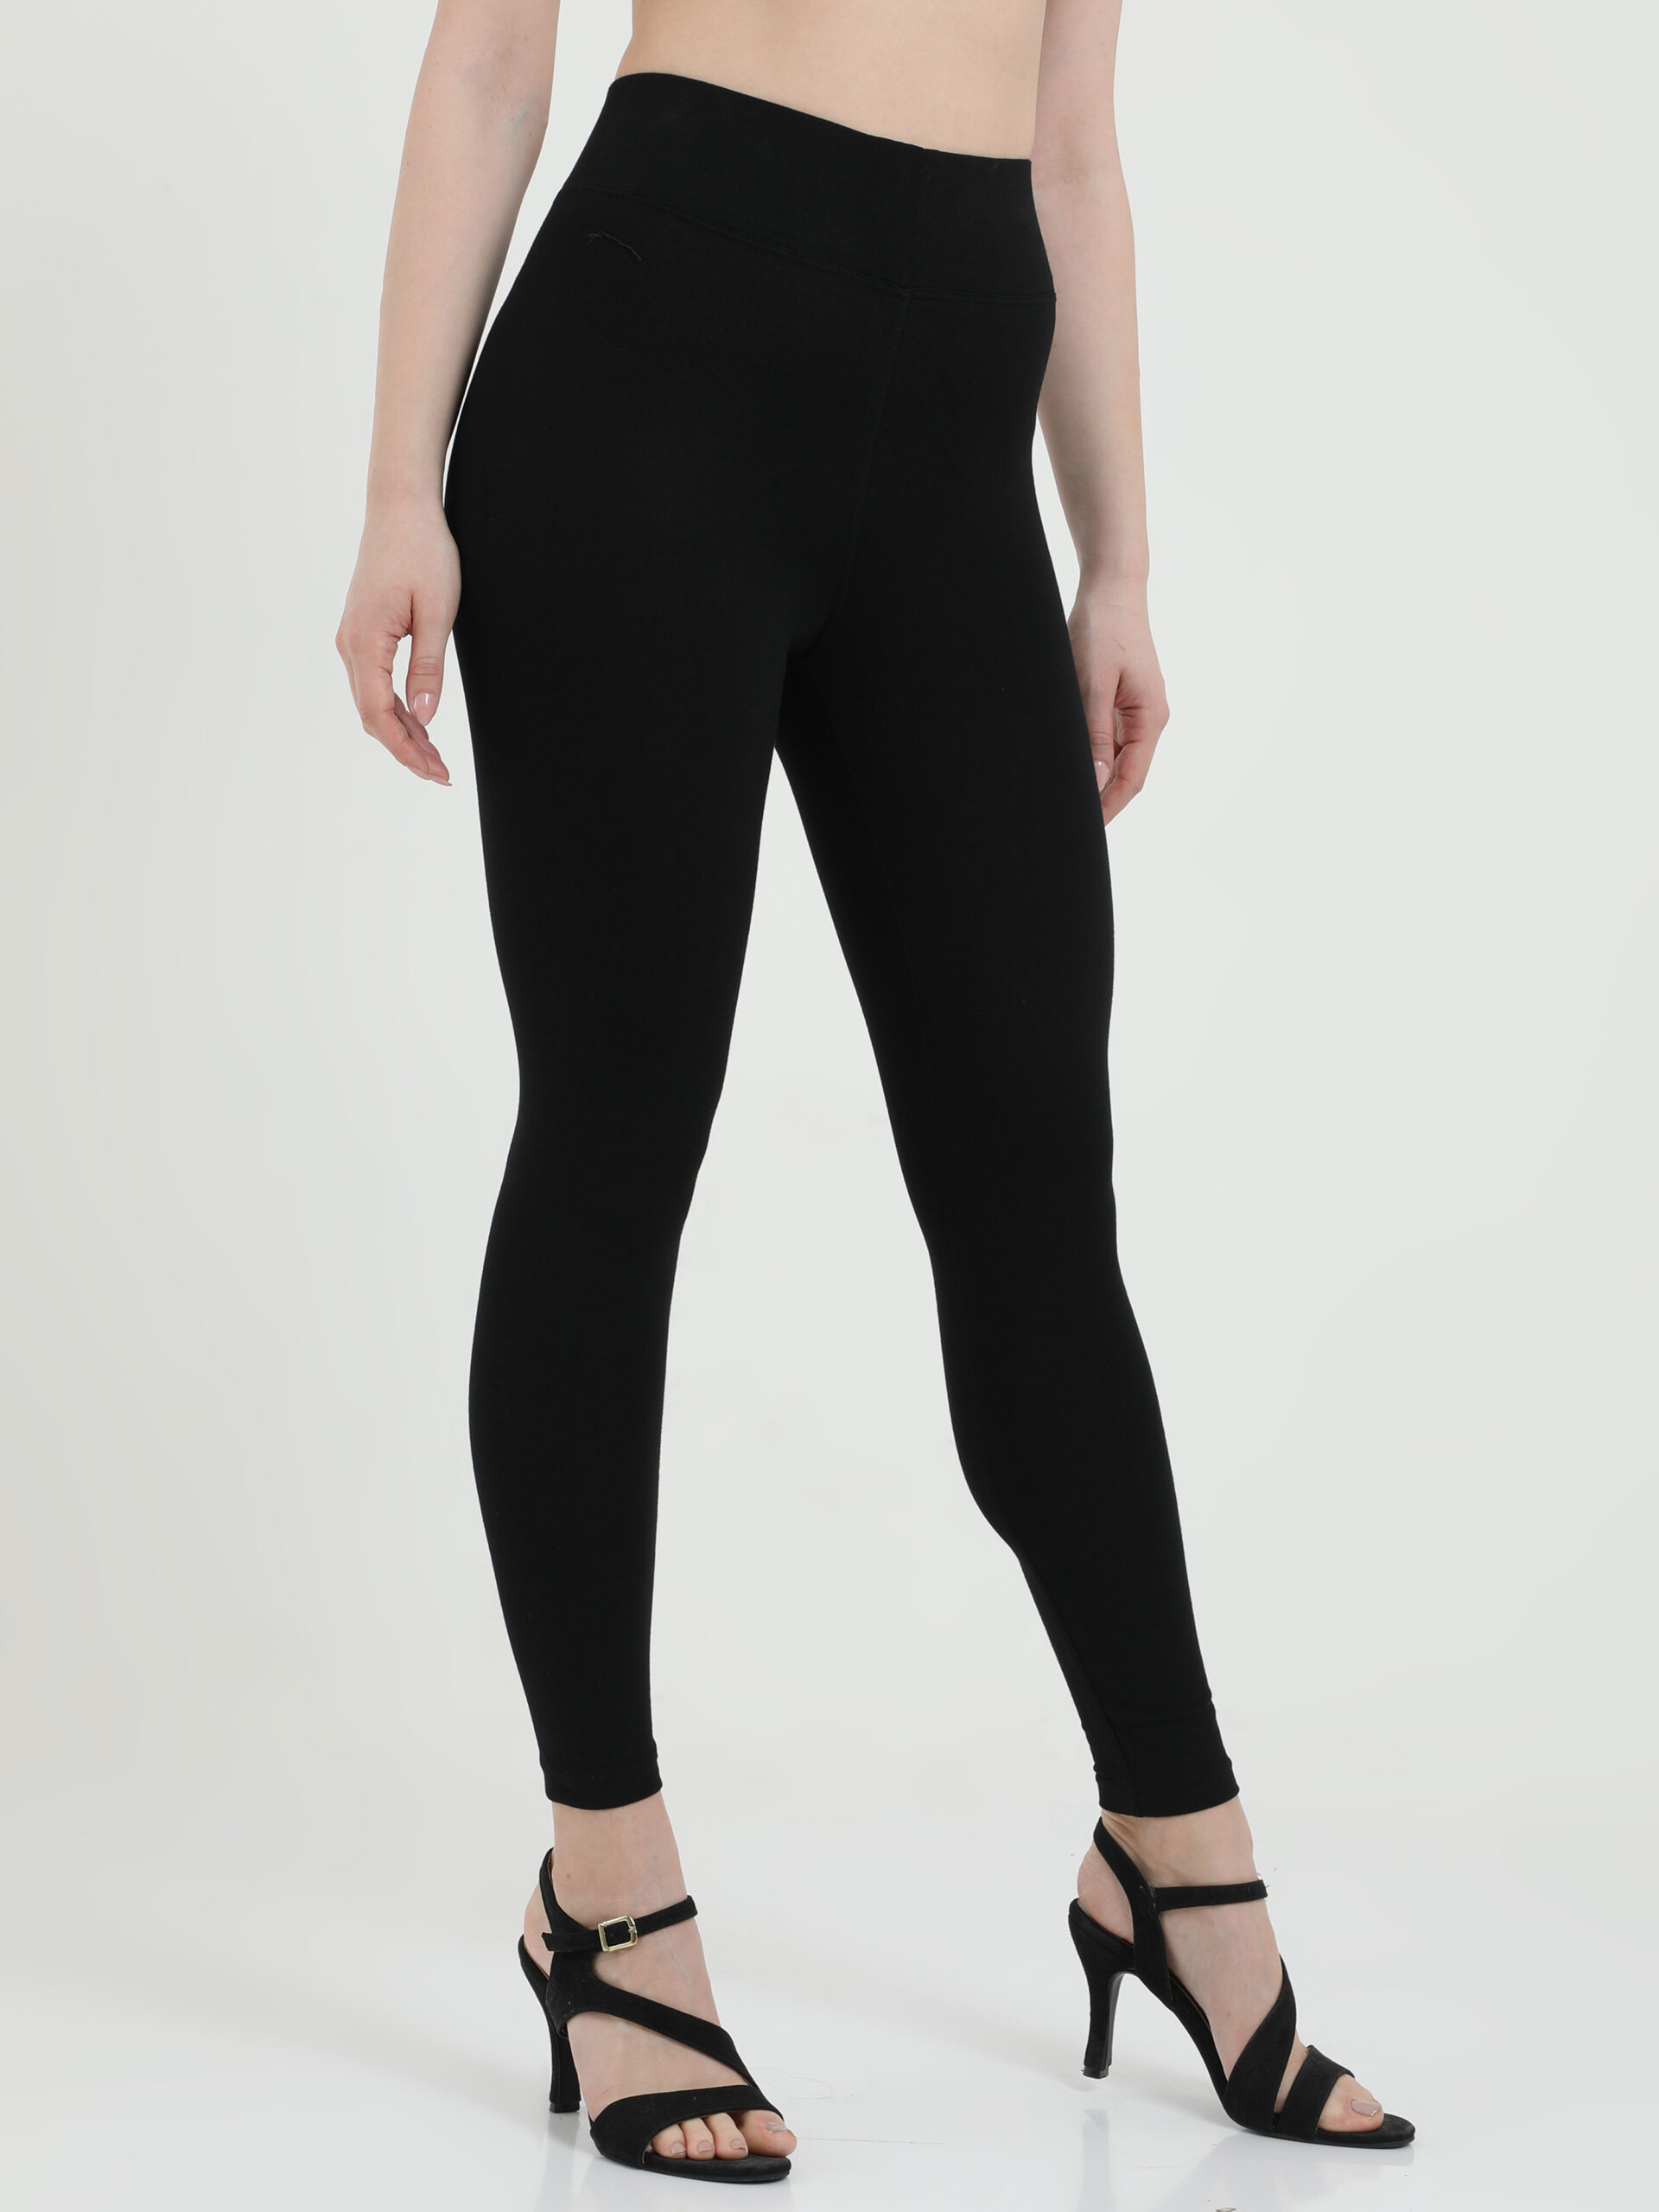 Black leggings for women Compression pant high waist - Belore Slims